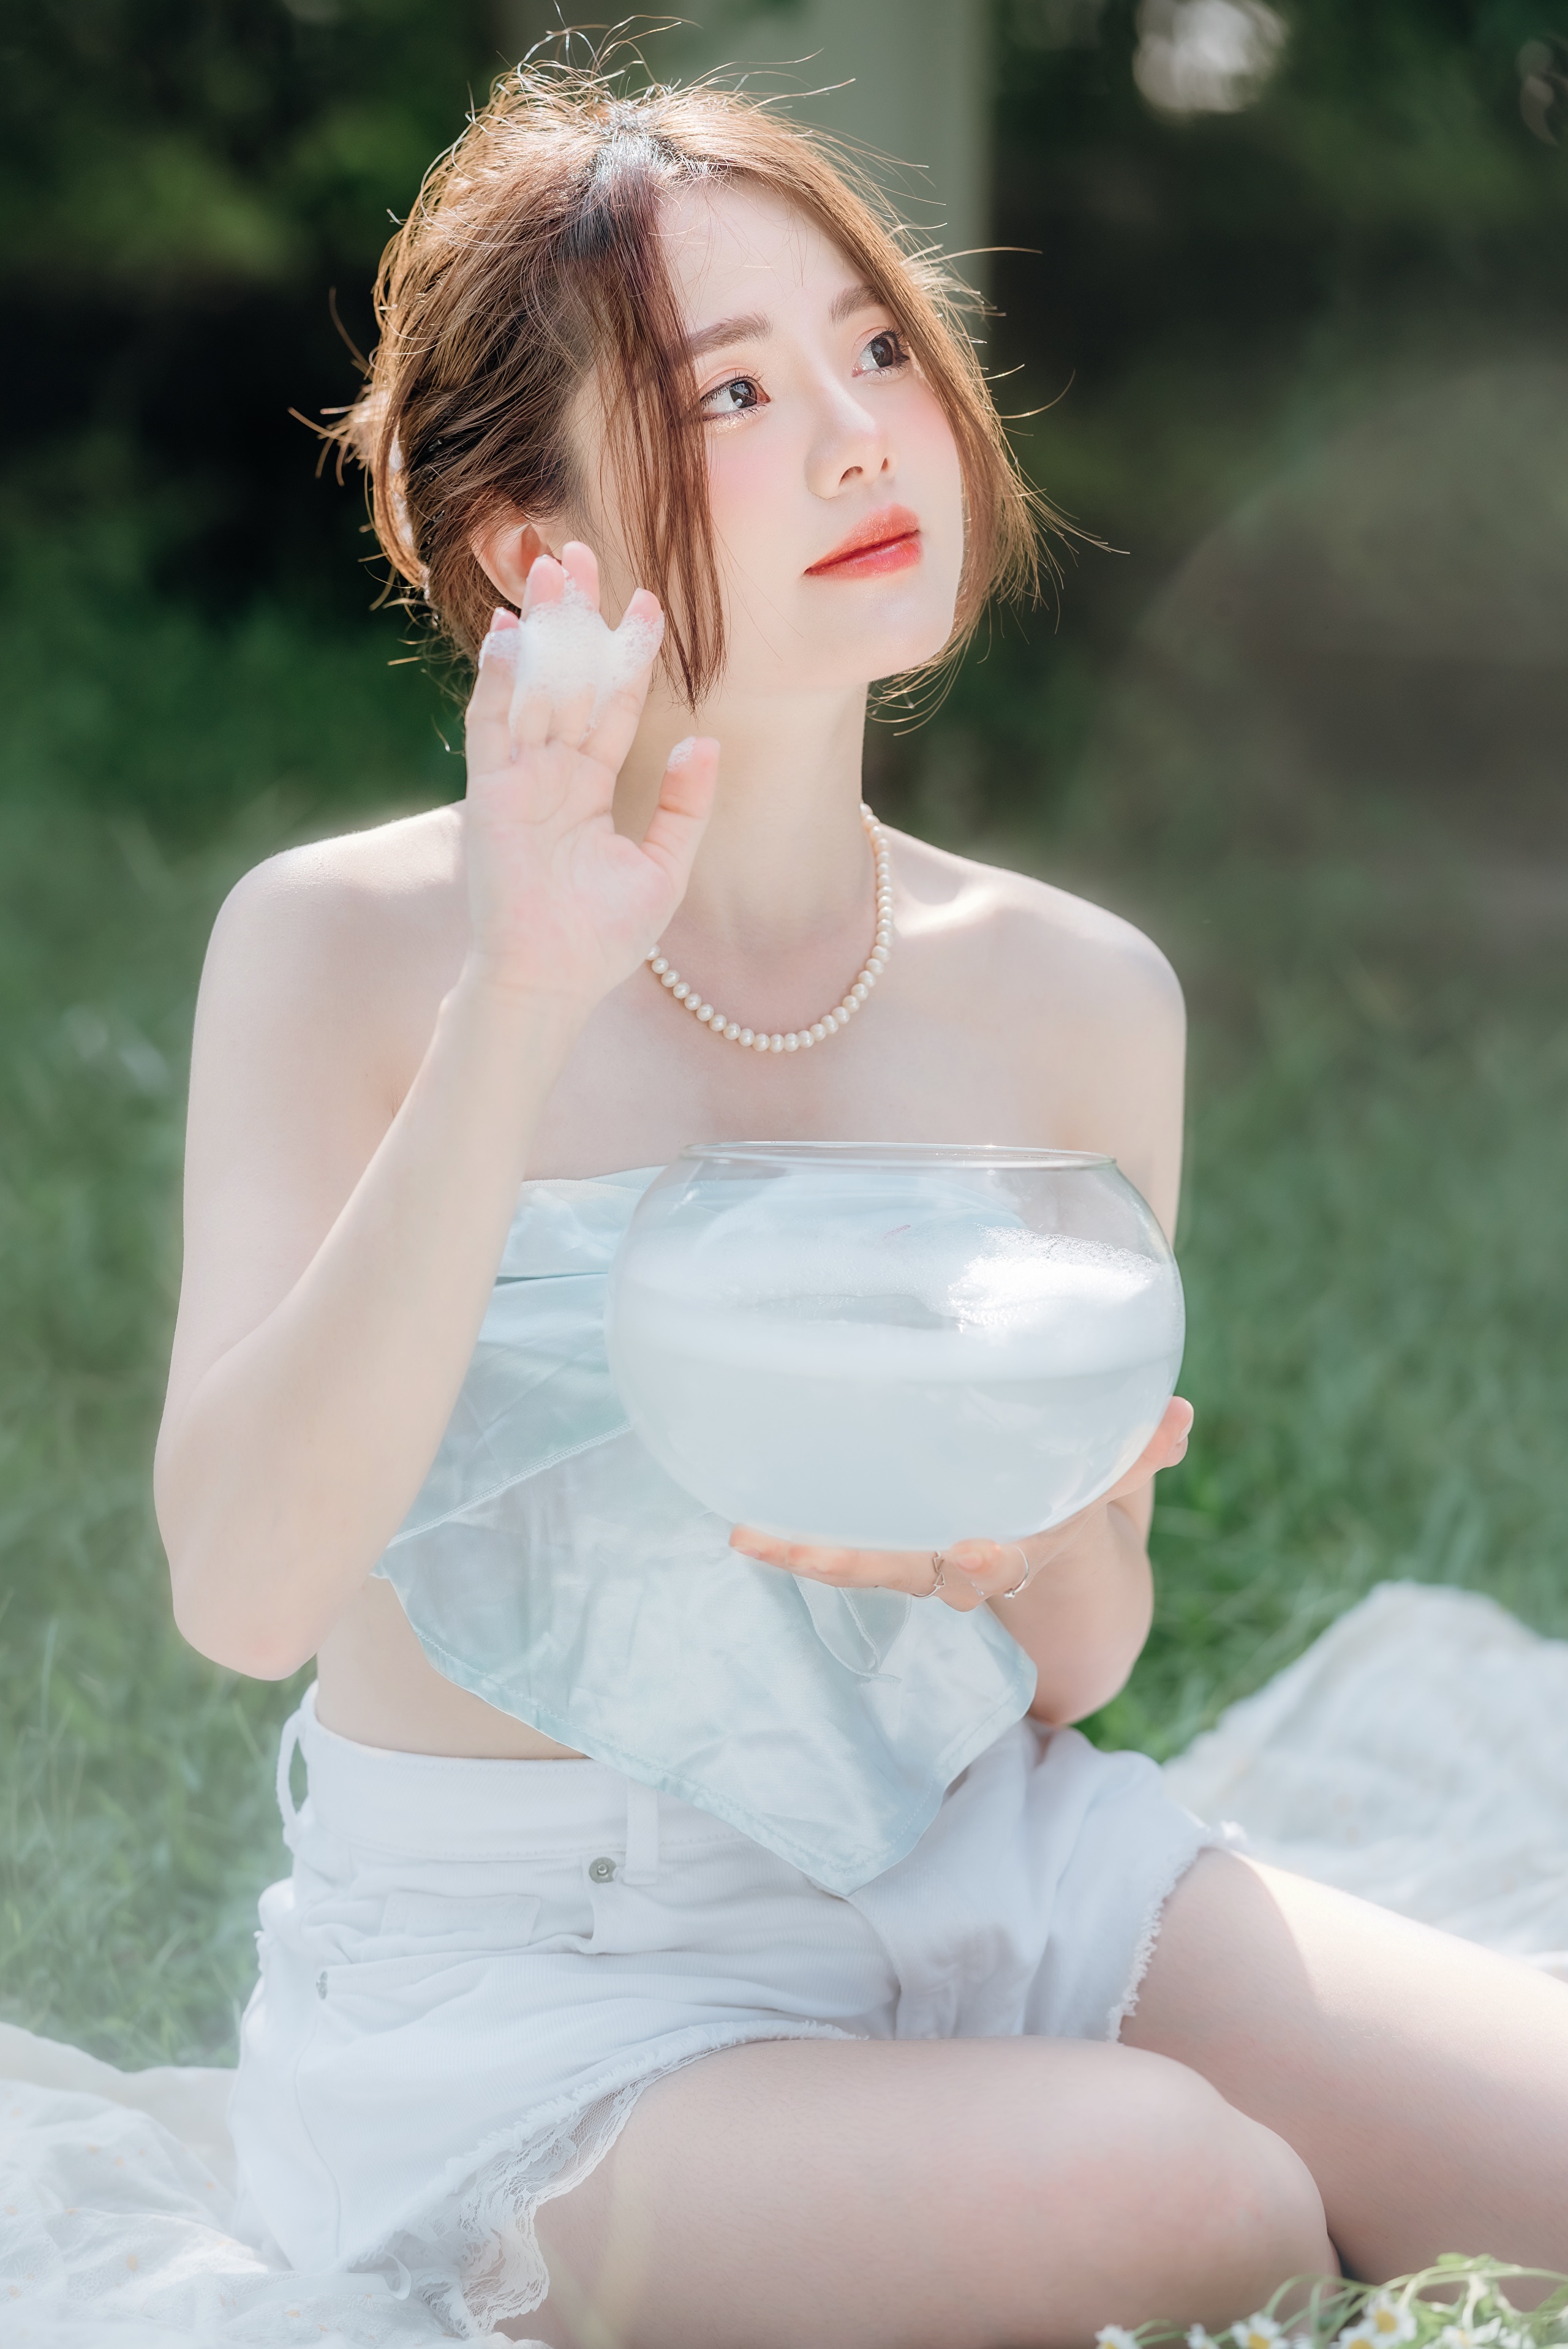 Asian Model Women Long Hair Dark Hair Sitting Grass Shorts Short Tops Hairbun Necklace Bowls Foam Bl 2560x3835